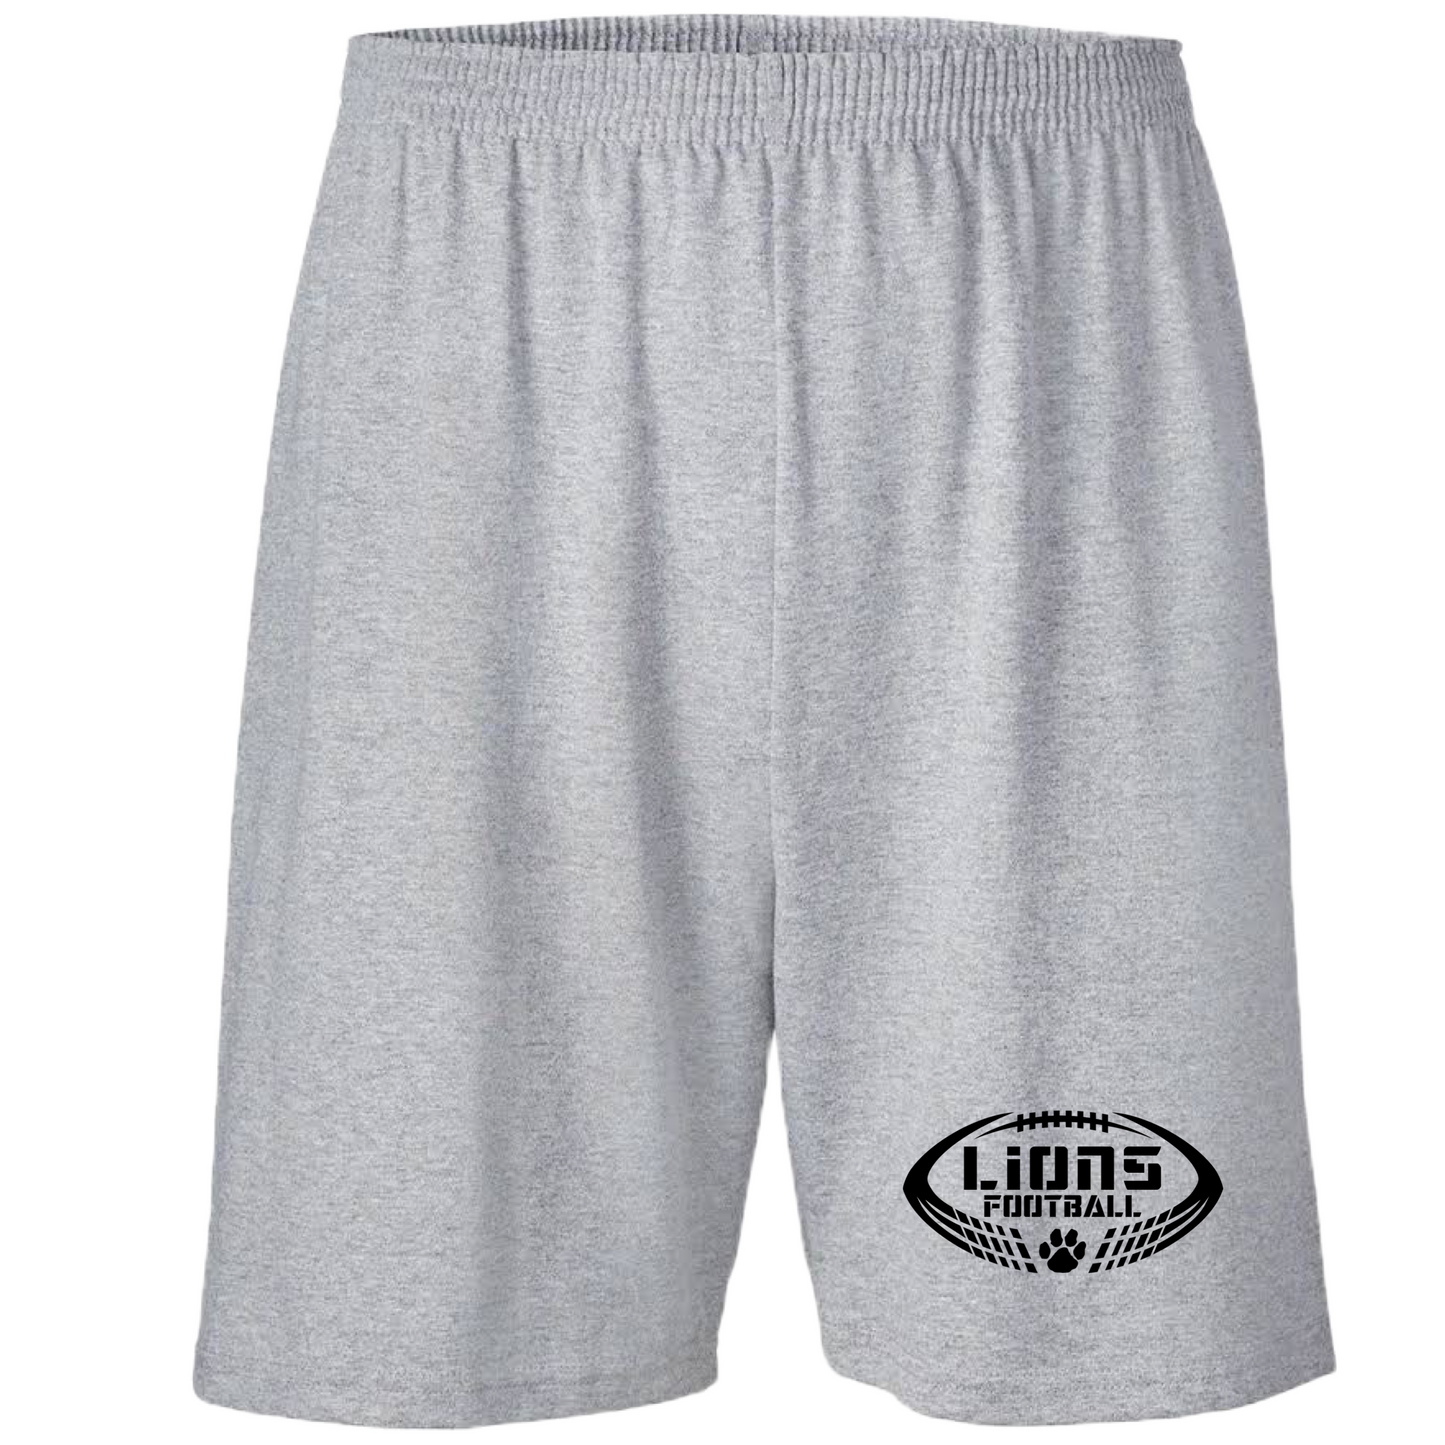 Lockport Shorts